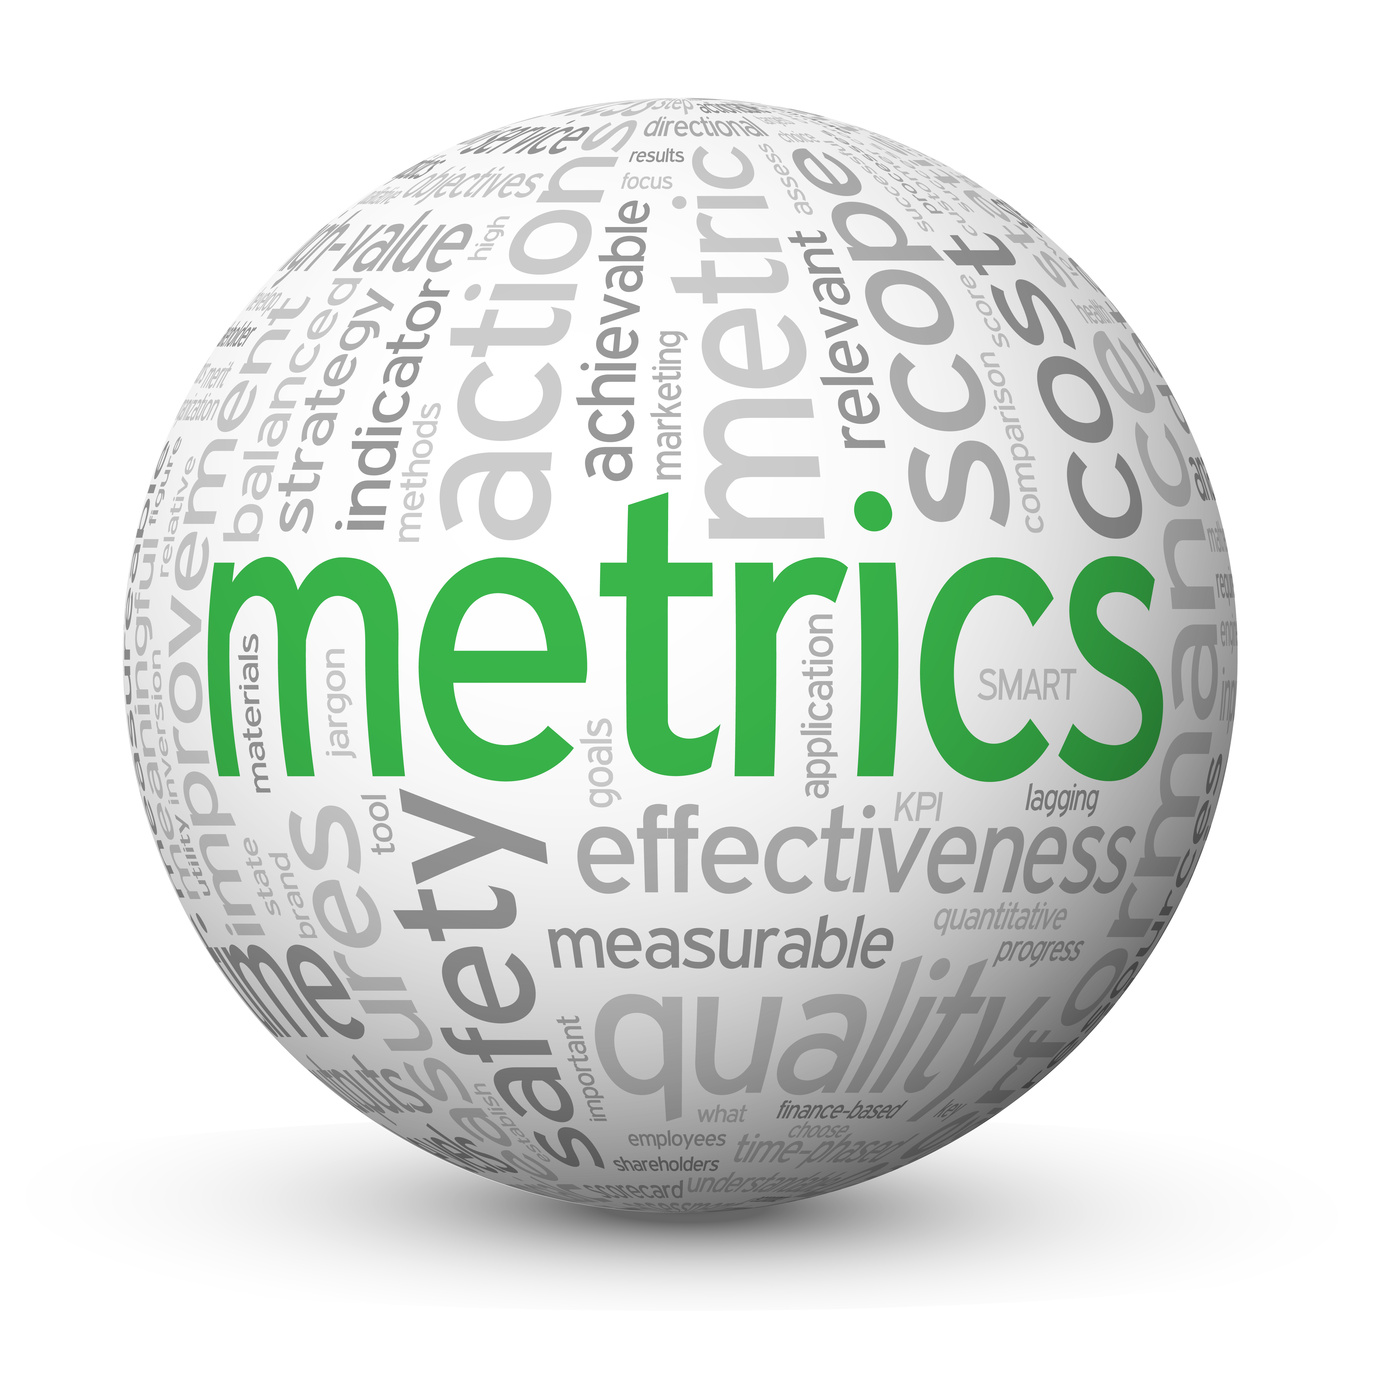 Effective Organizational Metrics On An Global Level